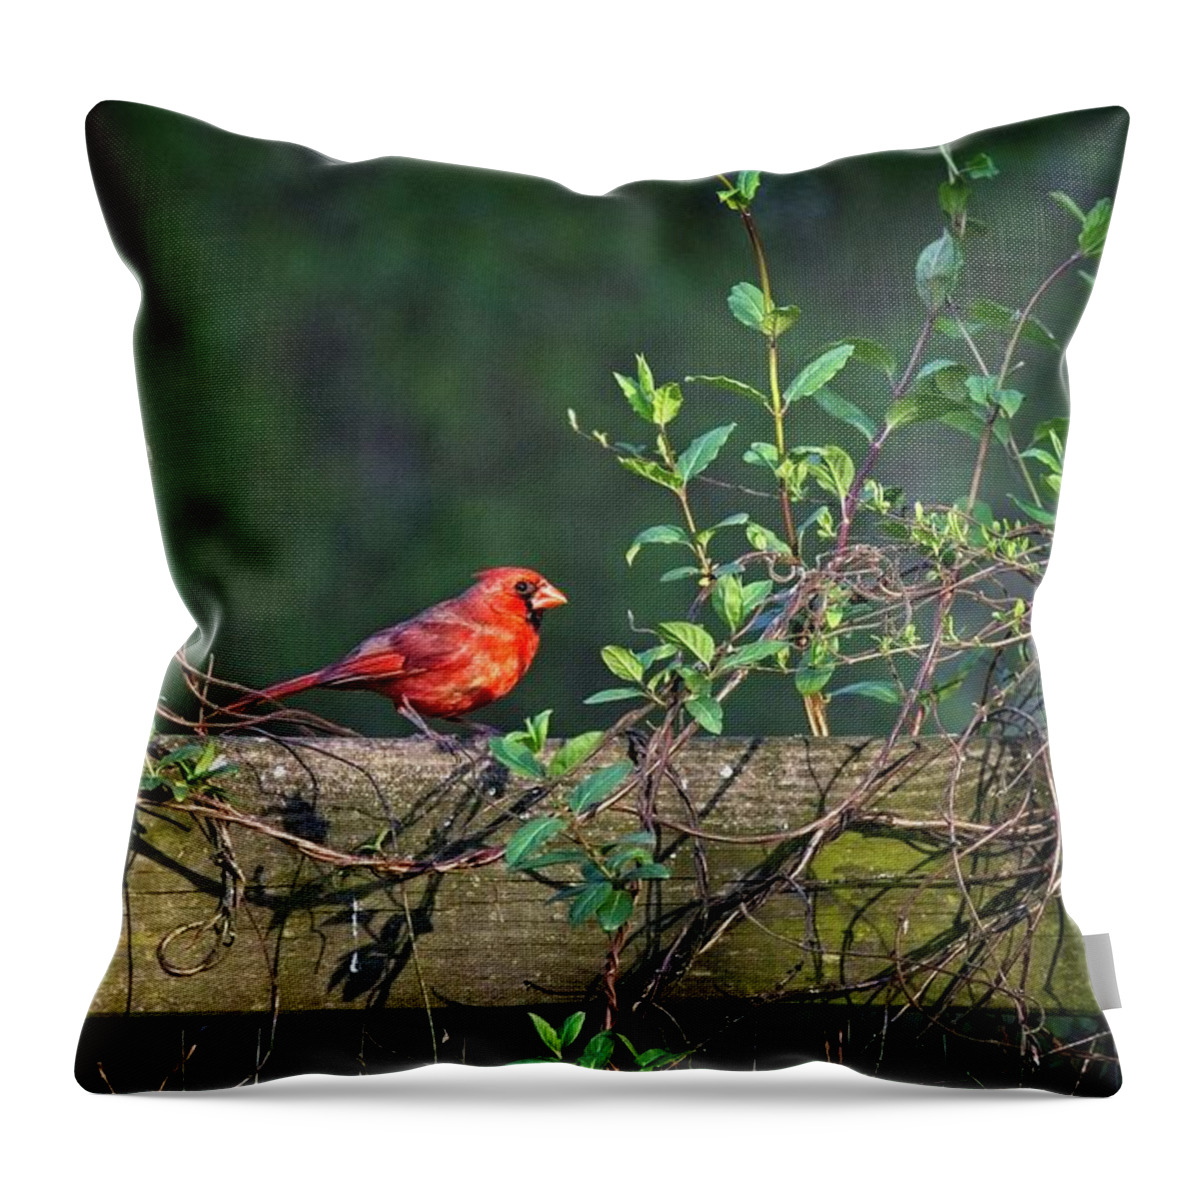 Wildlife Throw Pillow featuring the photograph Framed Cardinal by John Benedict